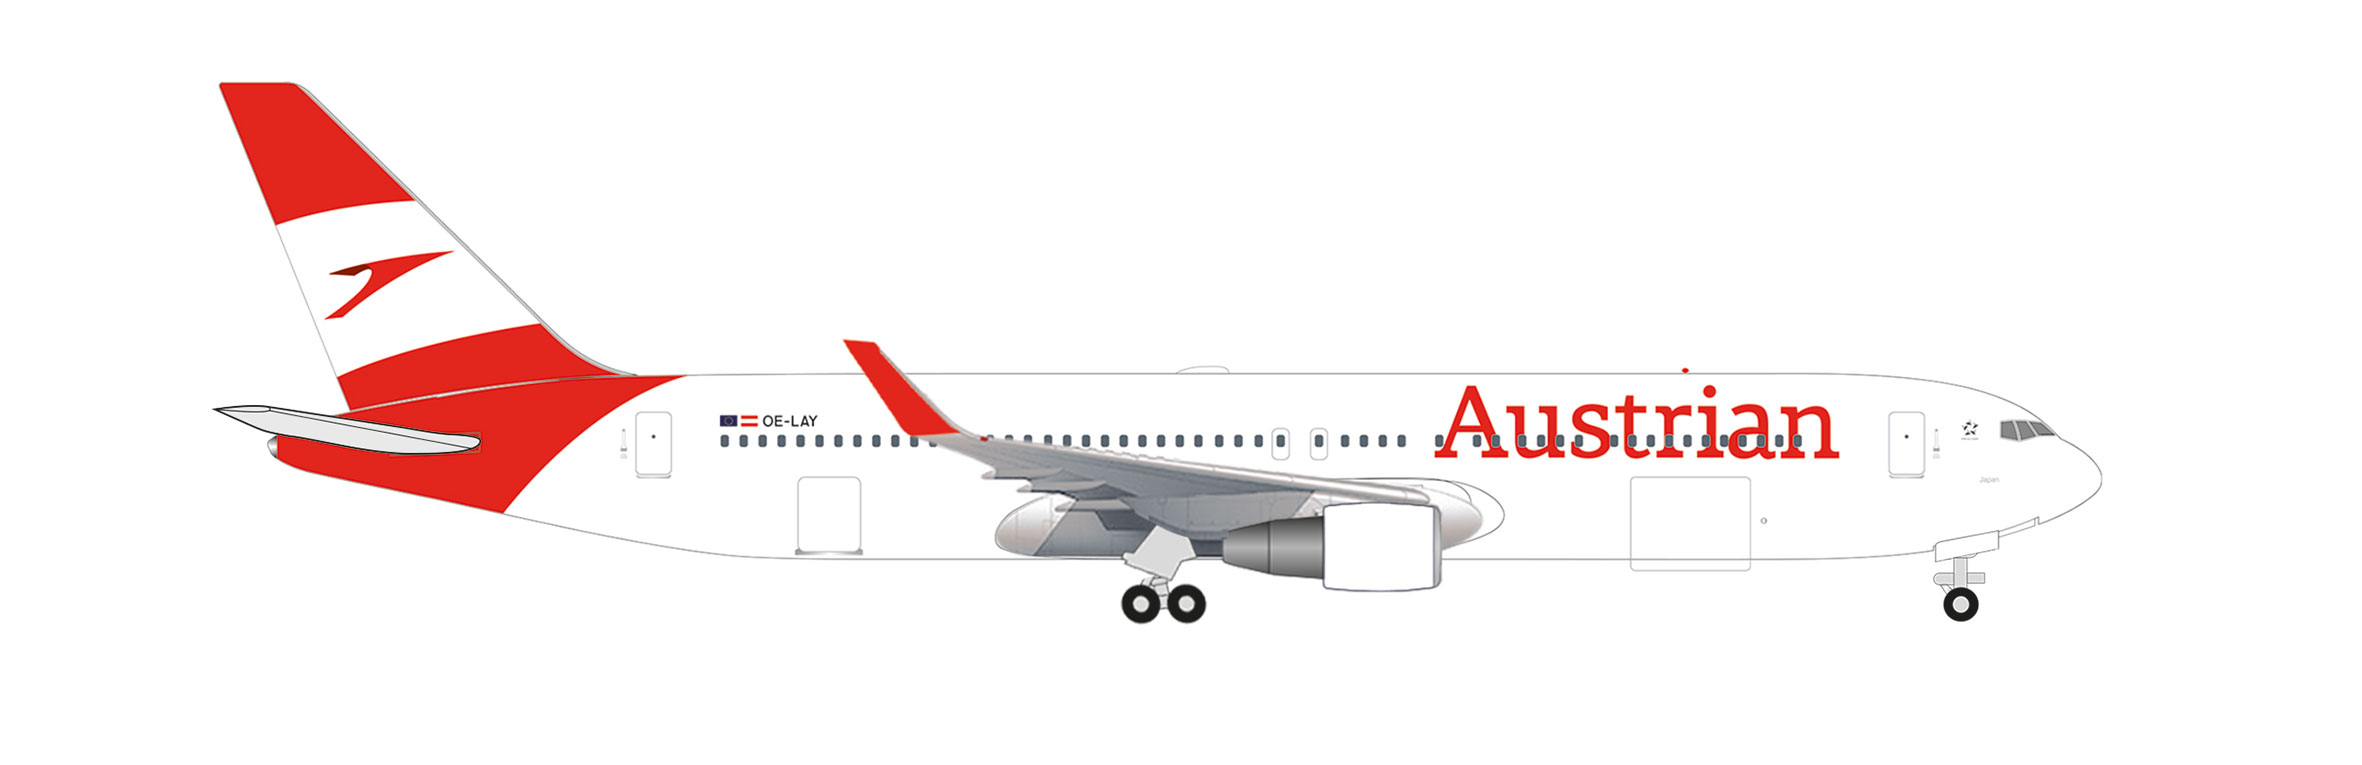 B767-300 Austrian Airlines nc 